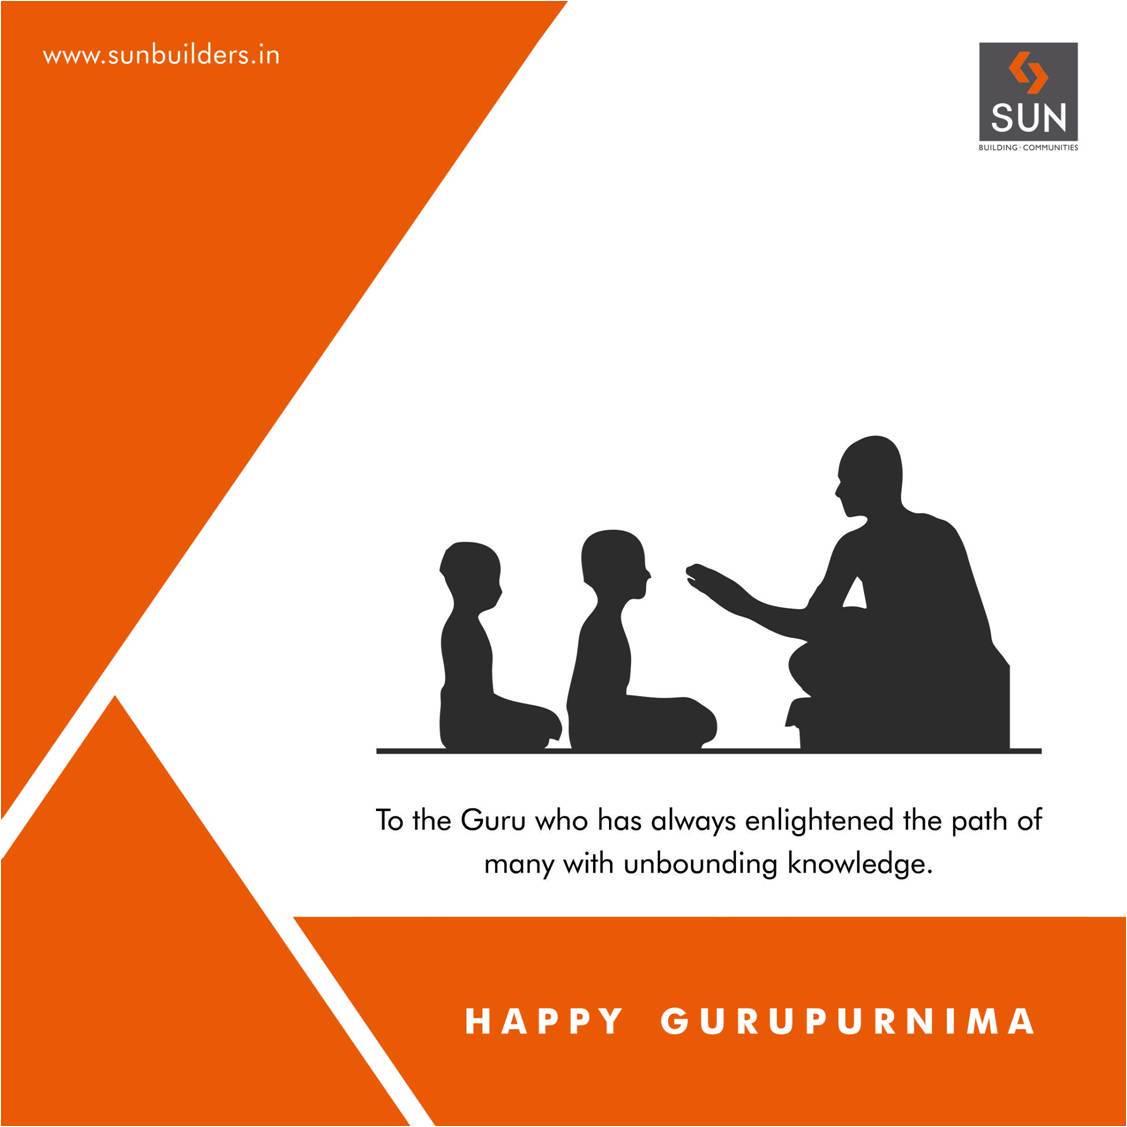 Wishing all our dedicated Gurus a devoted Guru Purnima today! http://t.co/veokUGqnyF